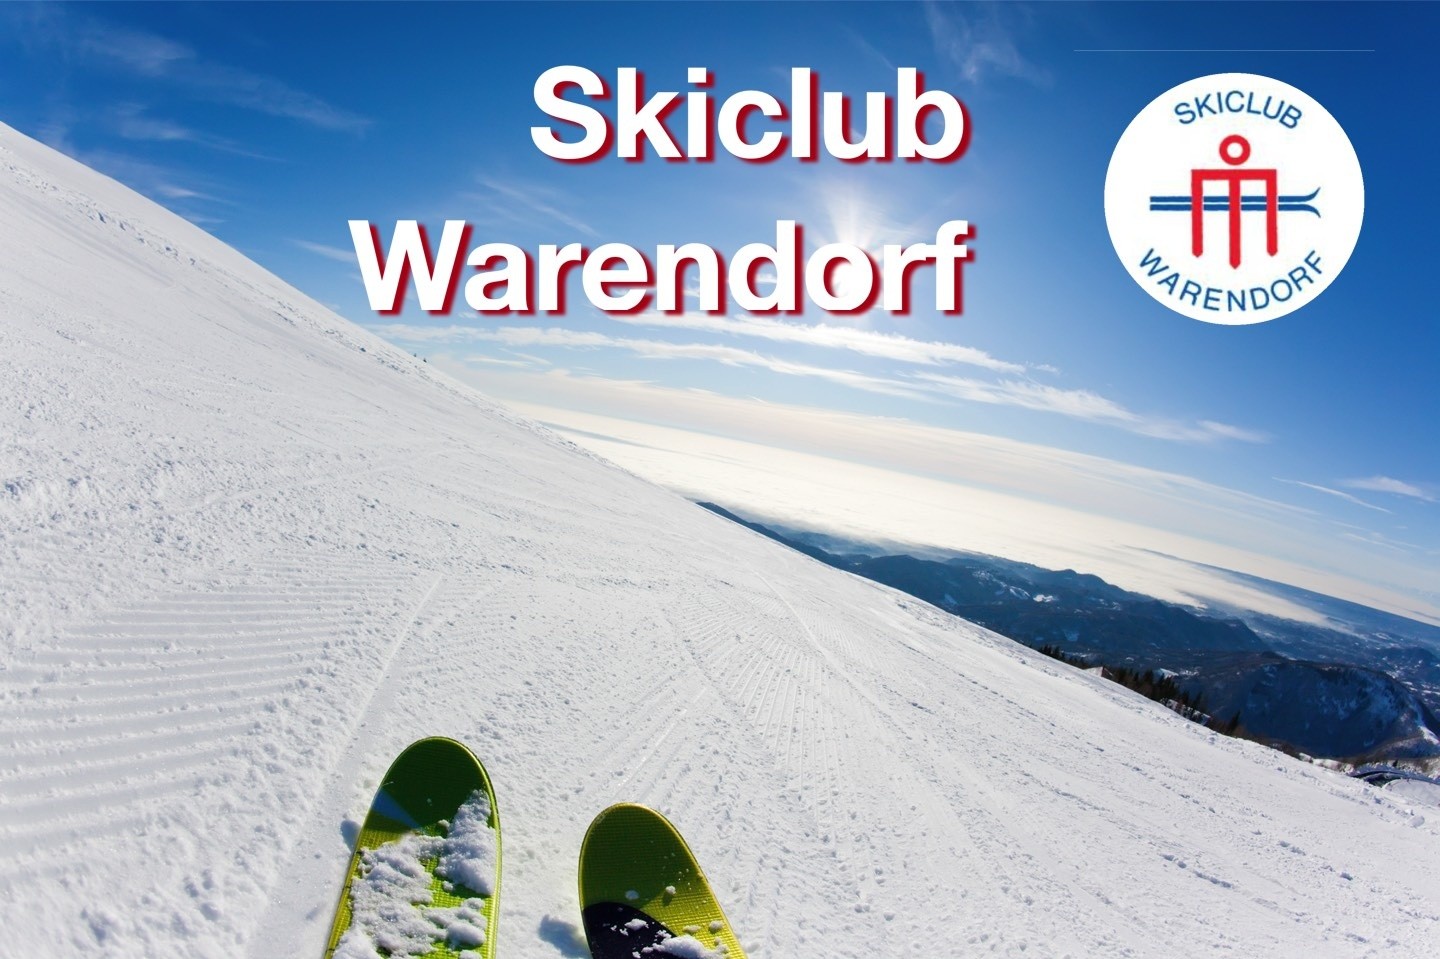 Skiclub,Radtour,Warendorf,